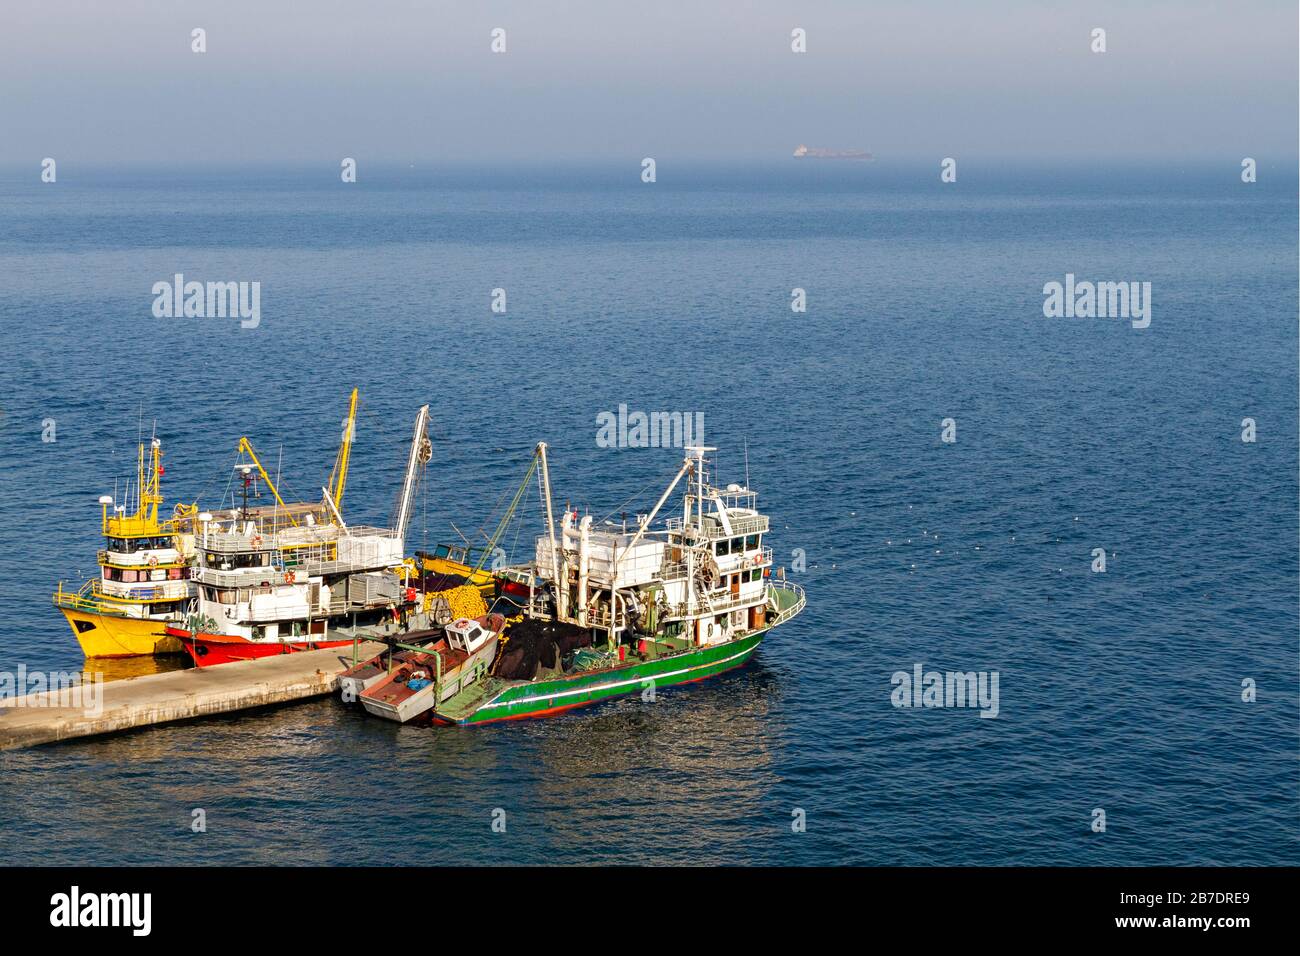 Colorful fishing boats on the Sea of Marmara, in Trilye, Mudanya Stock Photo